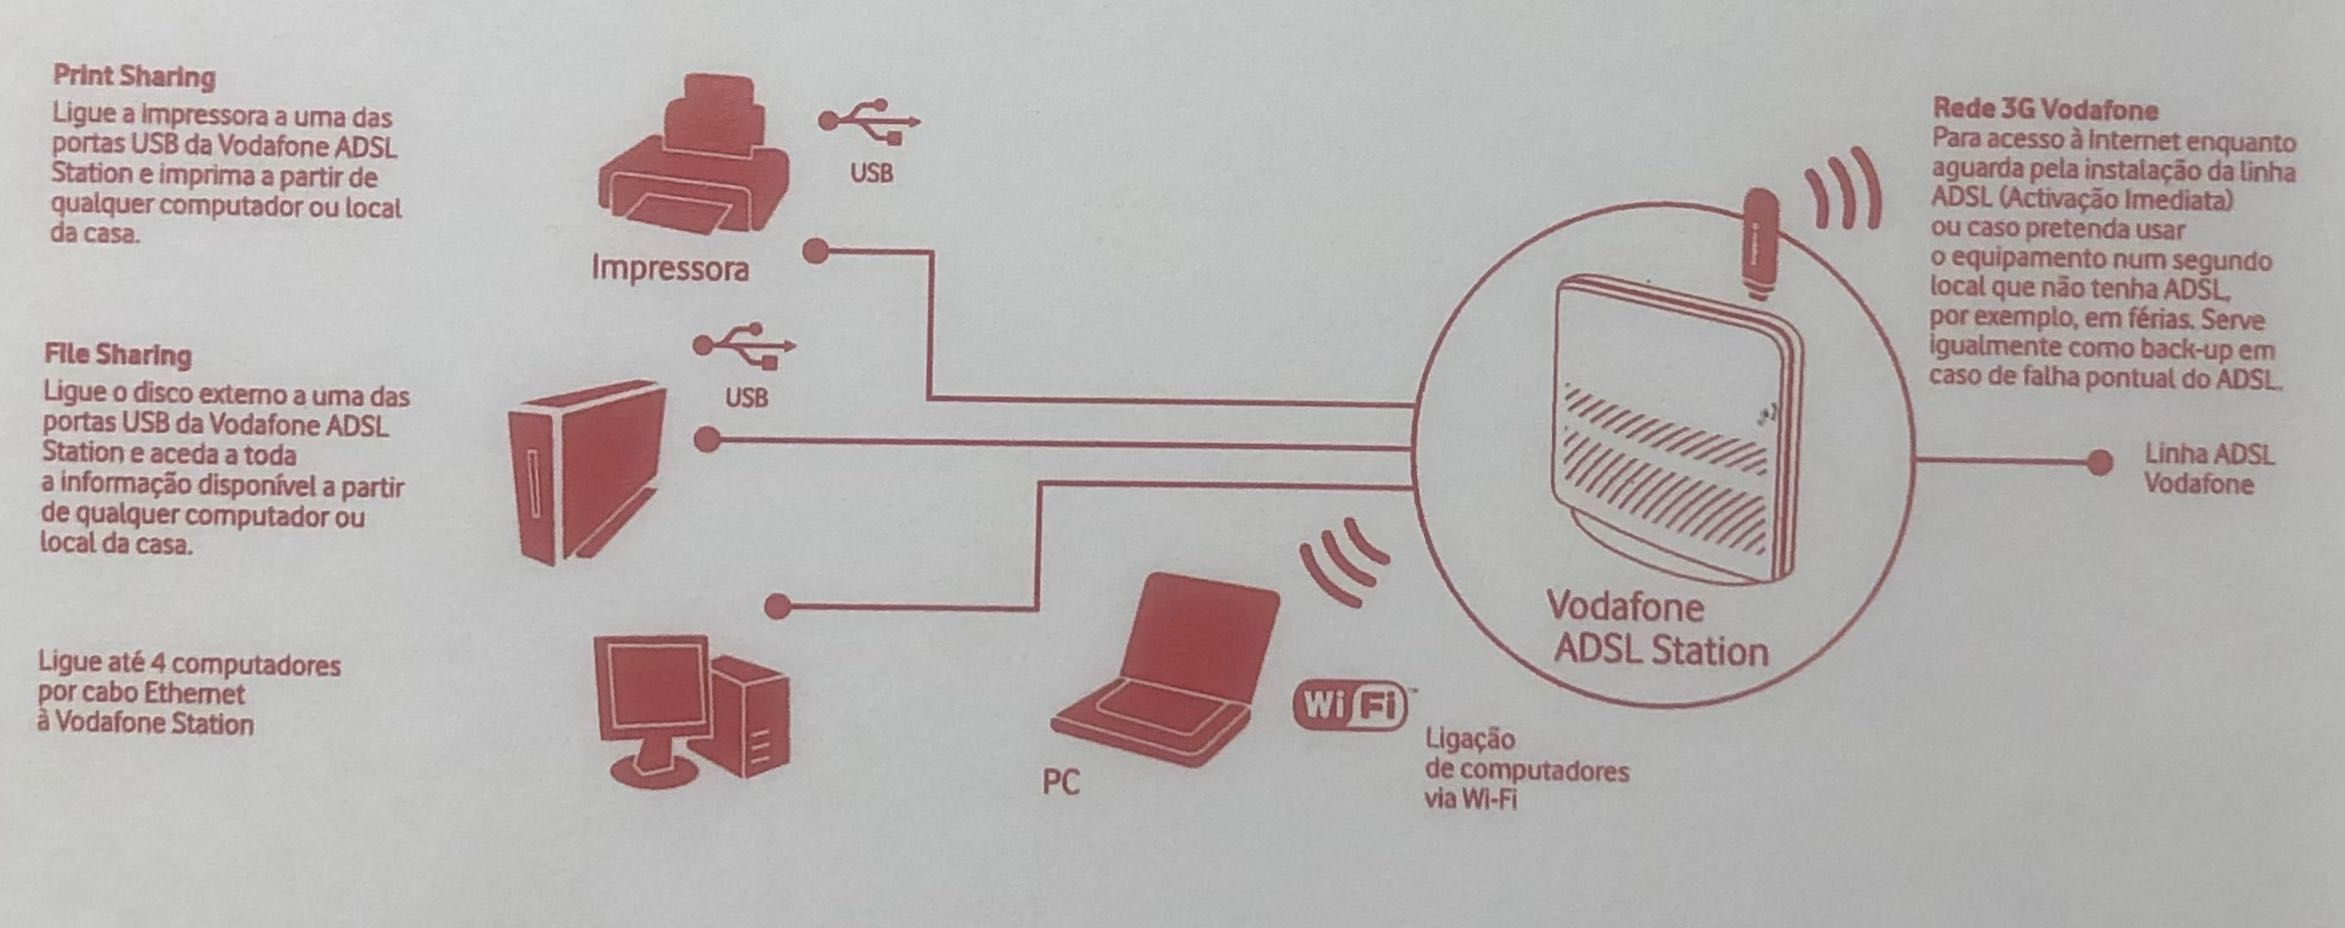 Vodafone ADSL Station (ADSL / Pen 3G Sem fios)